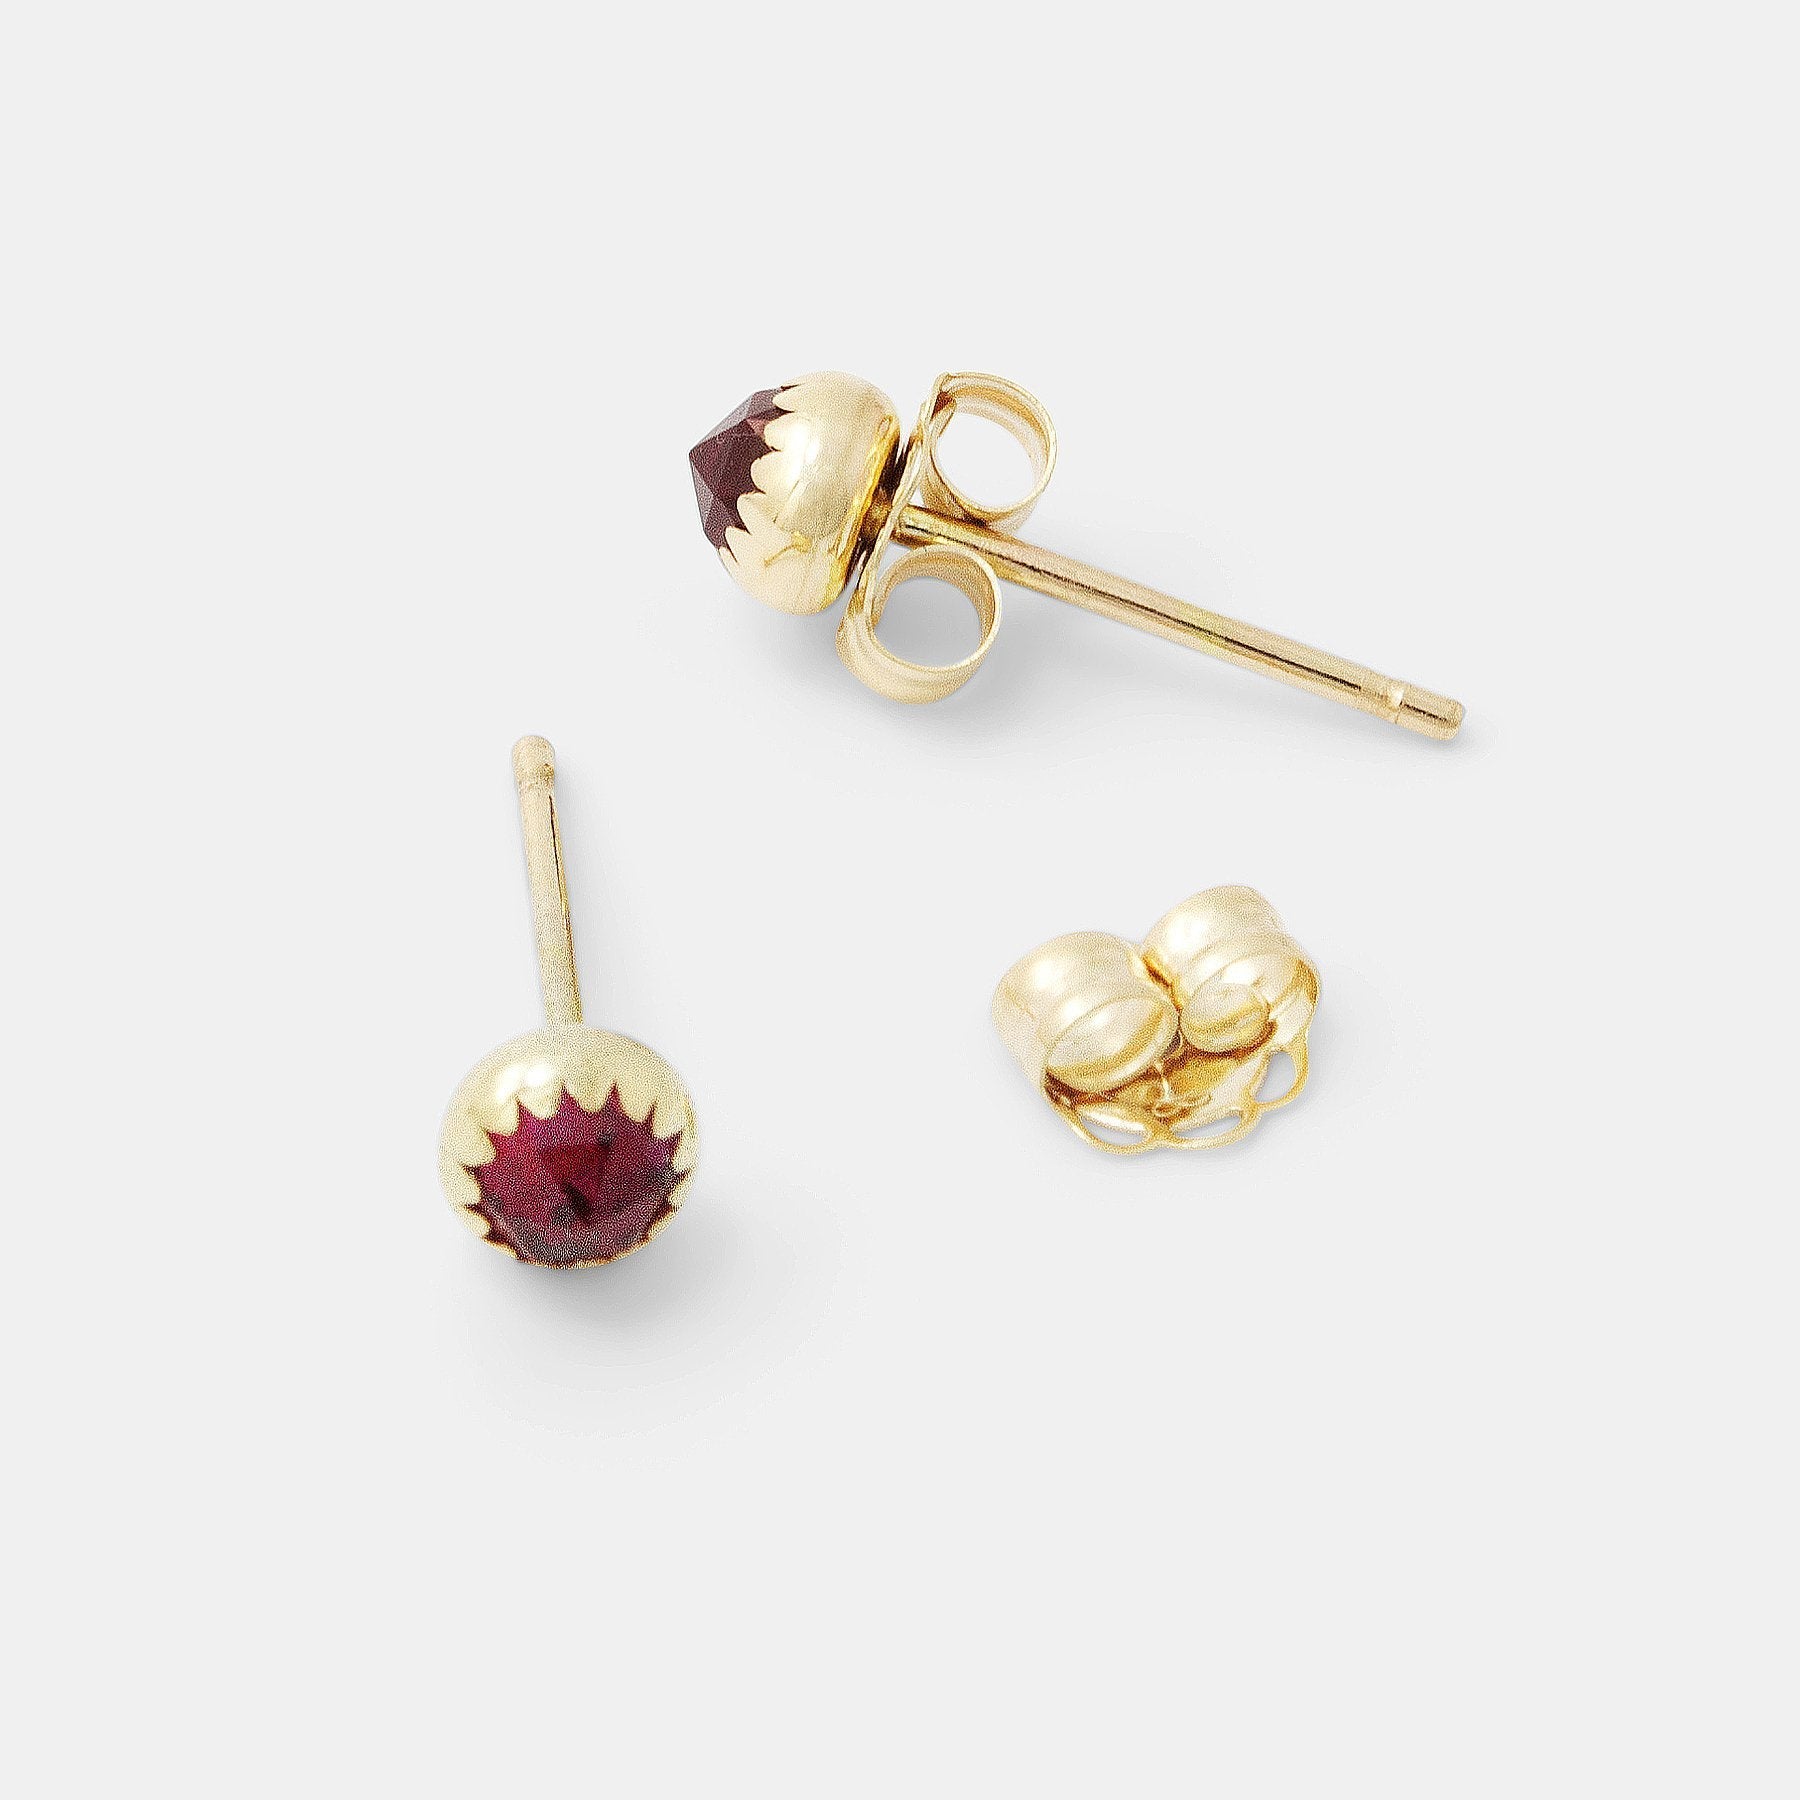 Ruby rose cut & solid gold stud earrings - Simone Walsh Jewellery Australia